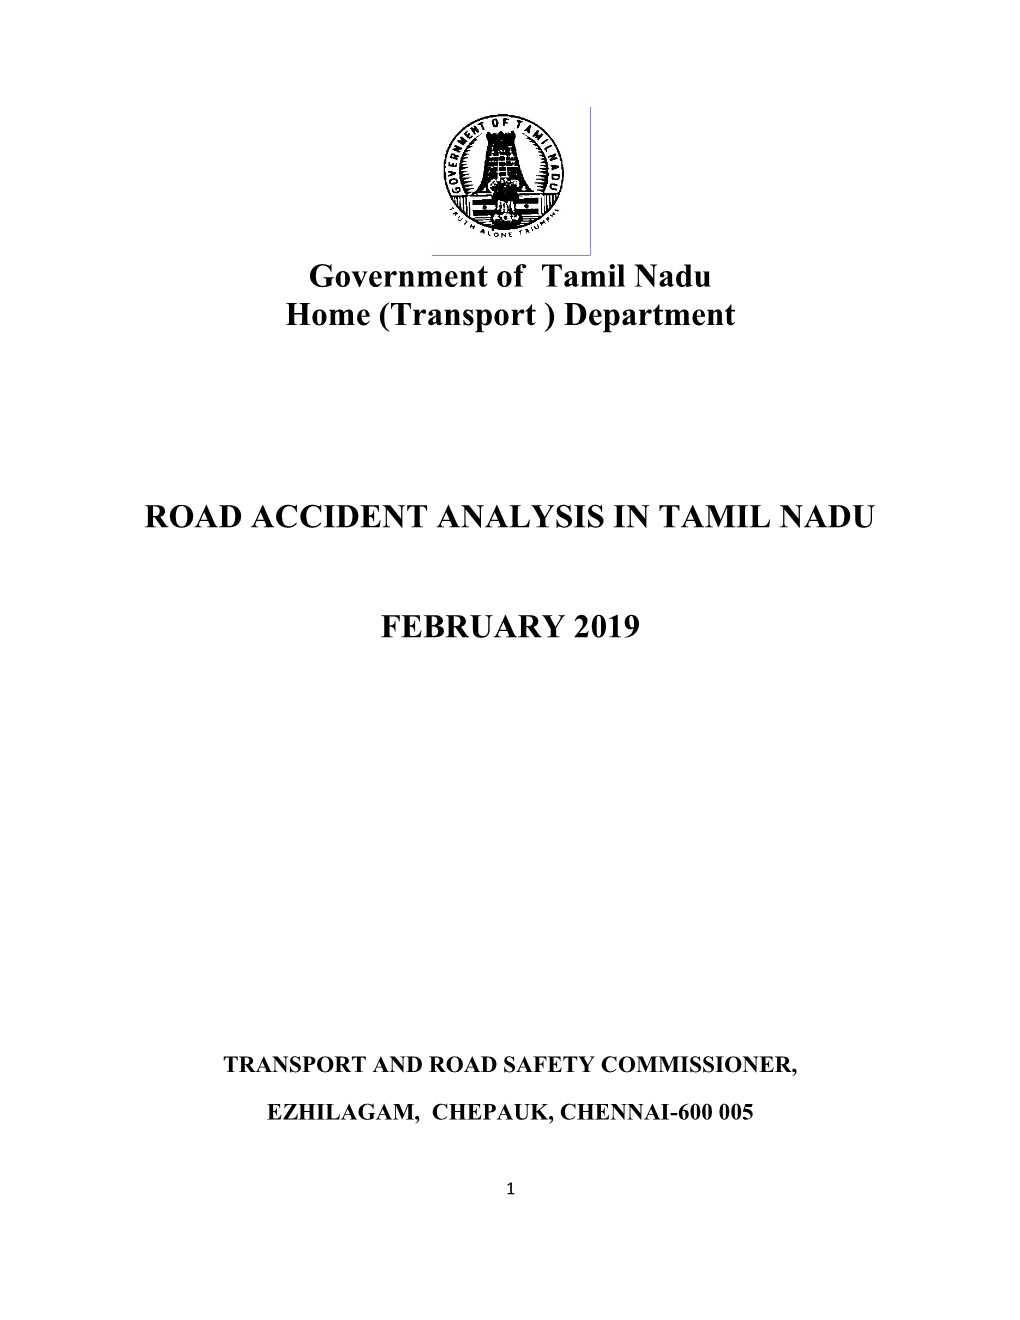 Department ROAD ACCIDENT ANALYSIS in TAMIL NADU